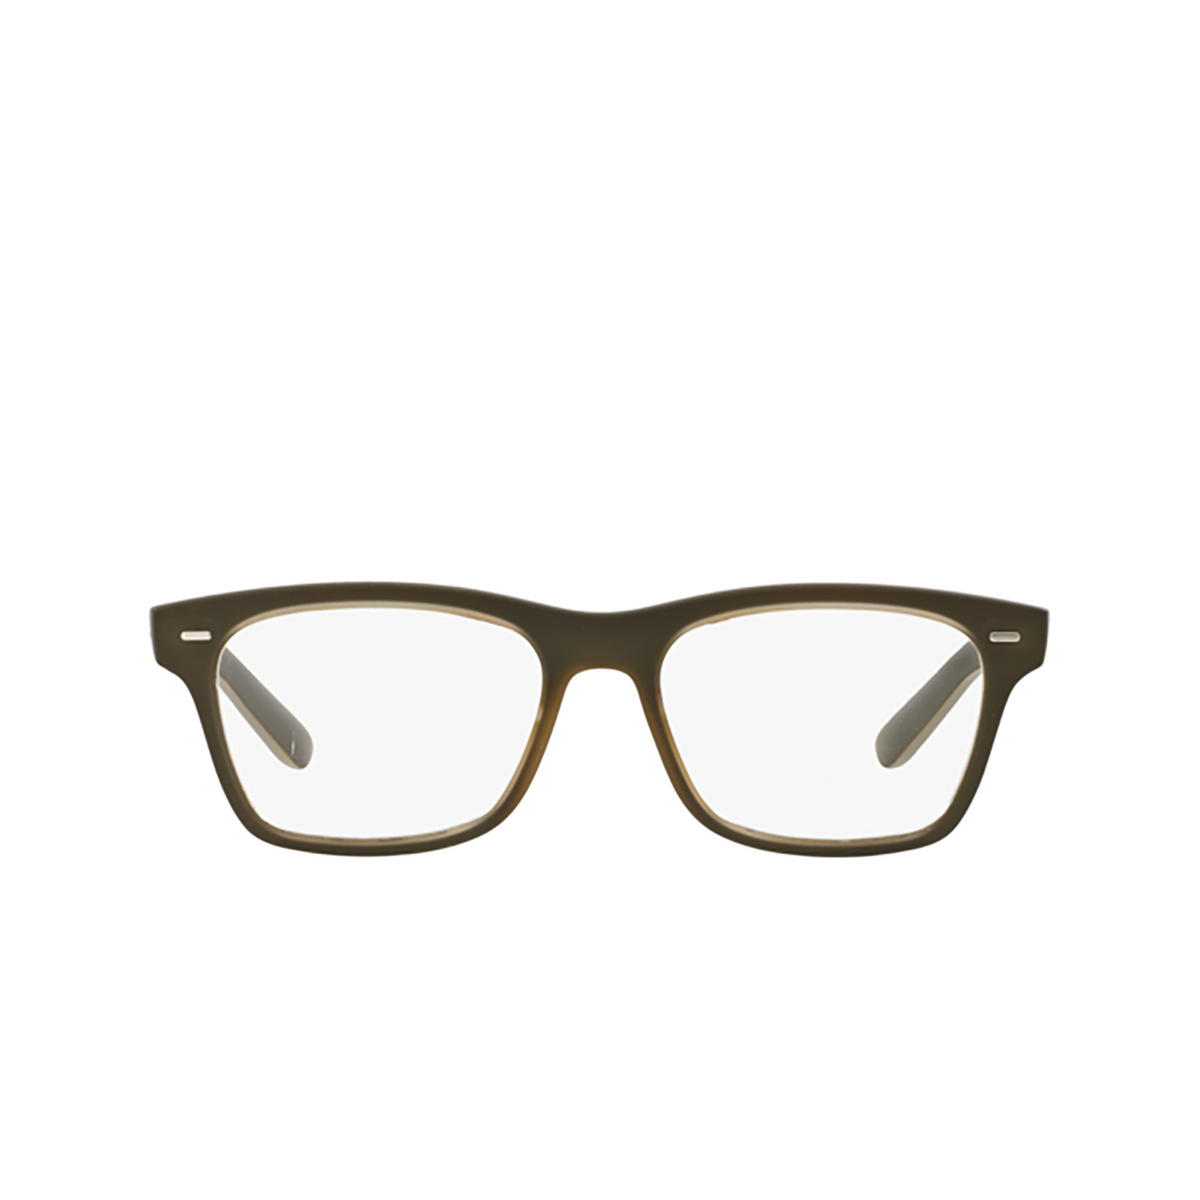 Dolce & Gabbana® Rectangle Eyeglasses: DG5014 color 2898 - 1/3.